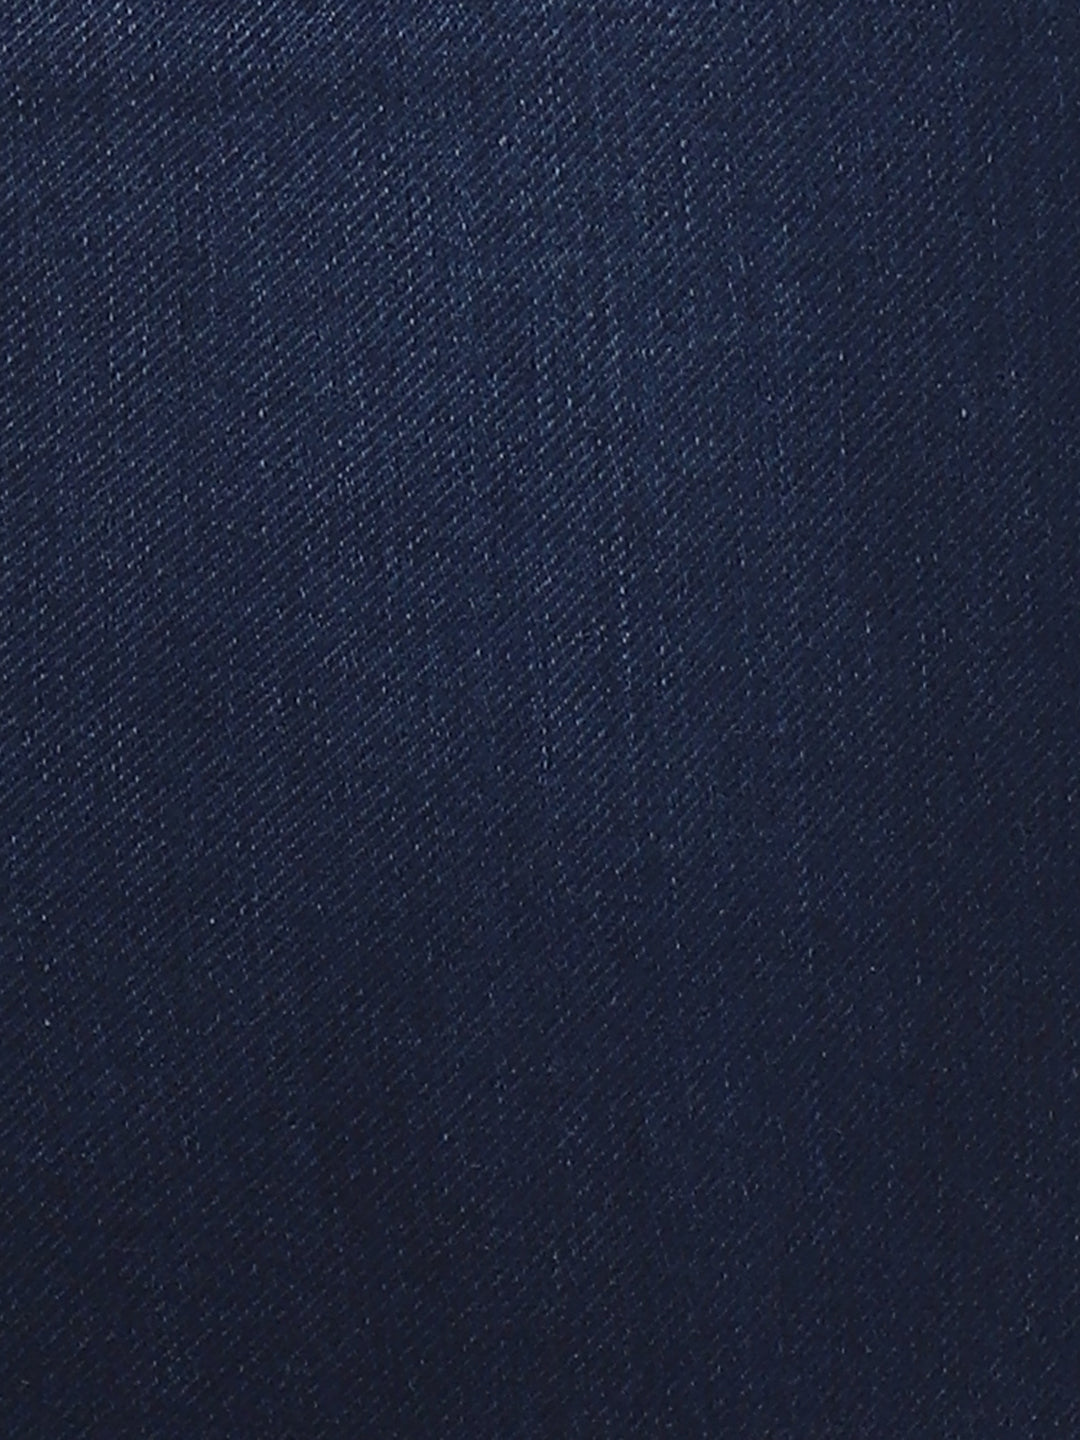 Cotton Stretch Navy Blue Narrow Fit Jeans